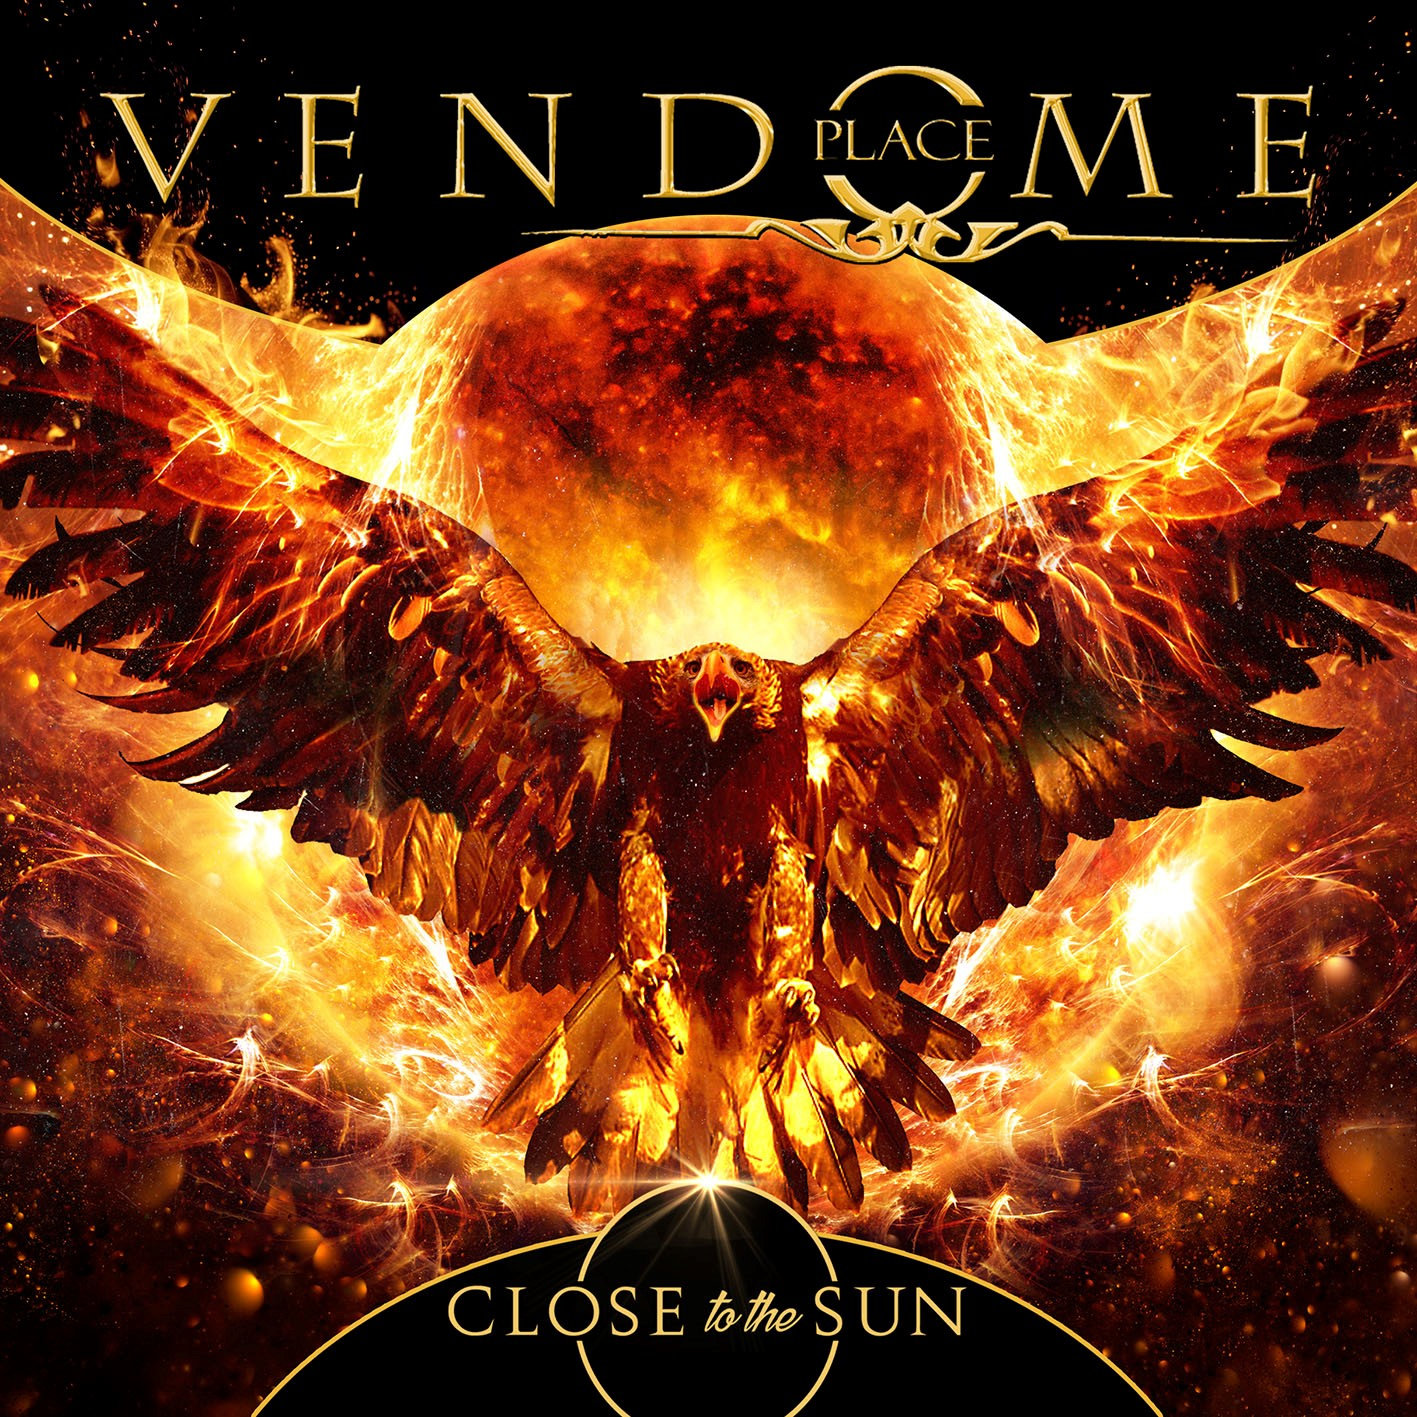 Place Vendome : Close To The Sun